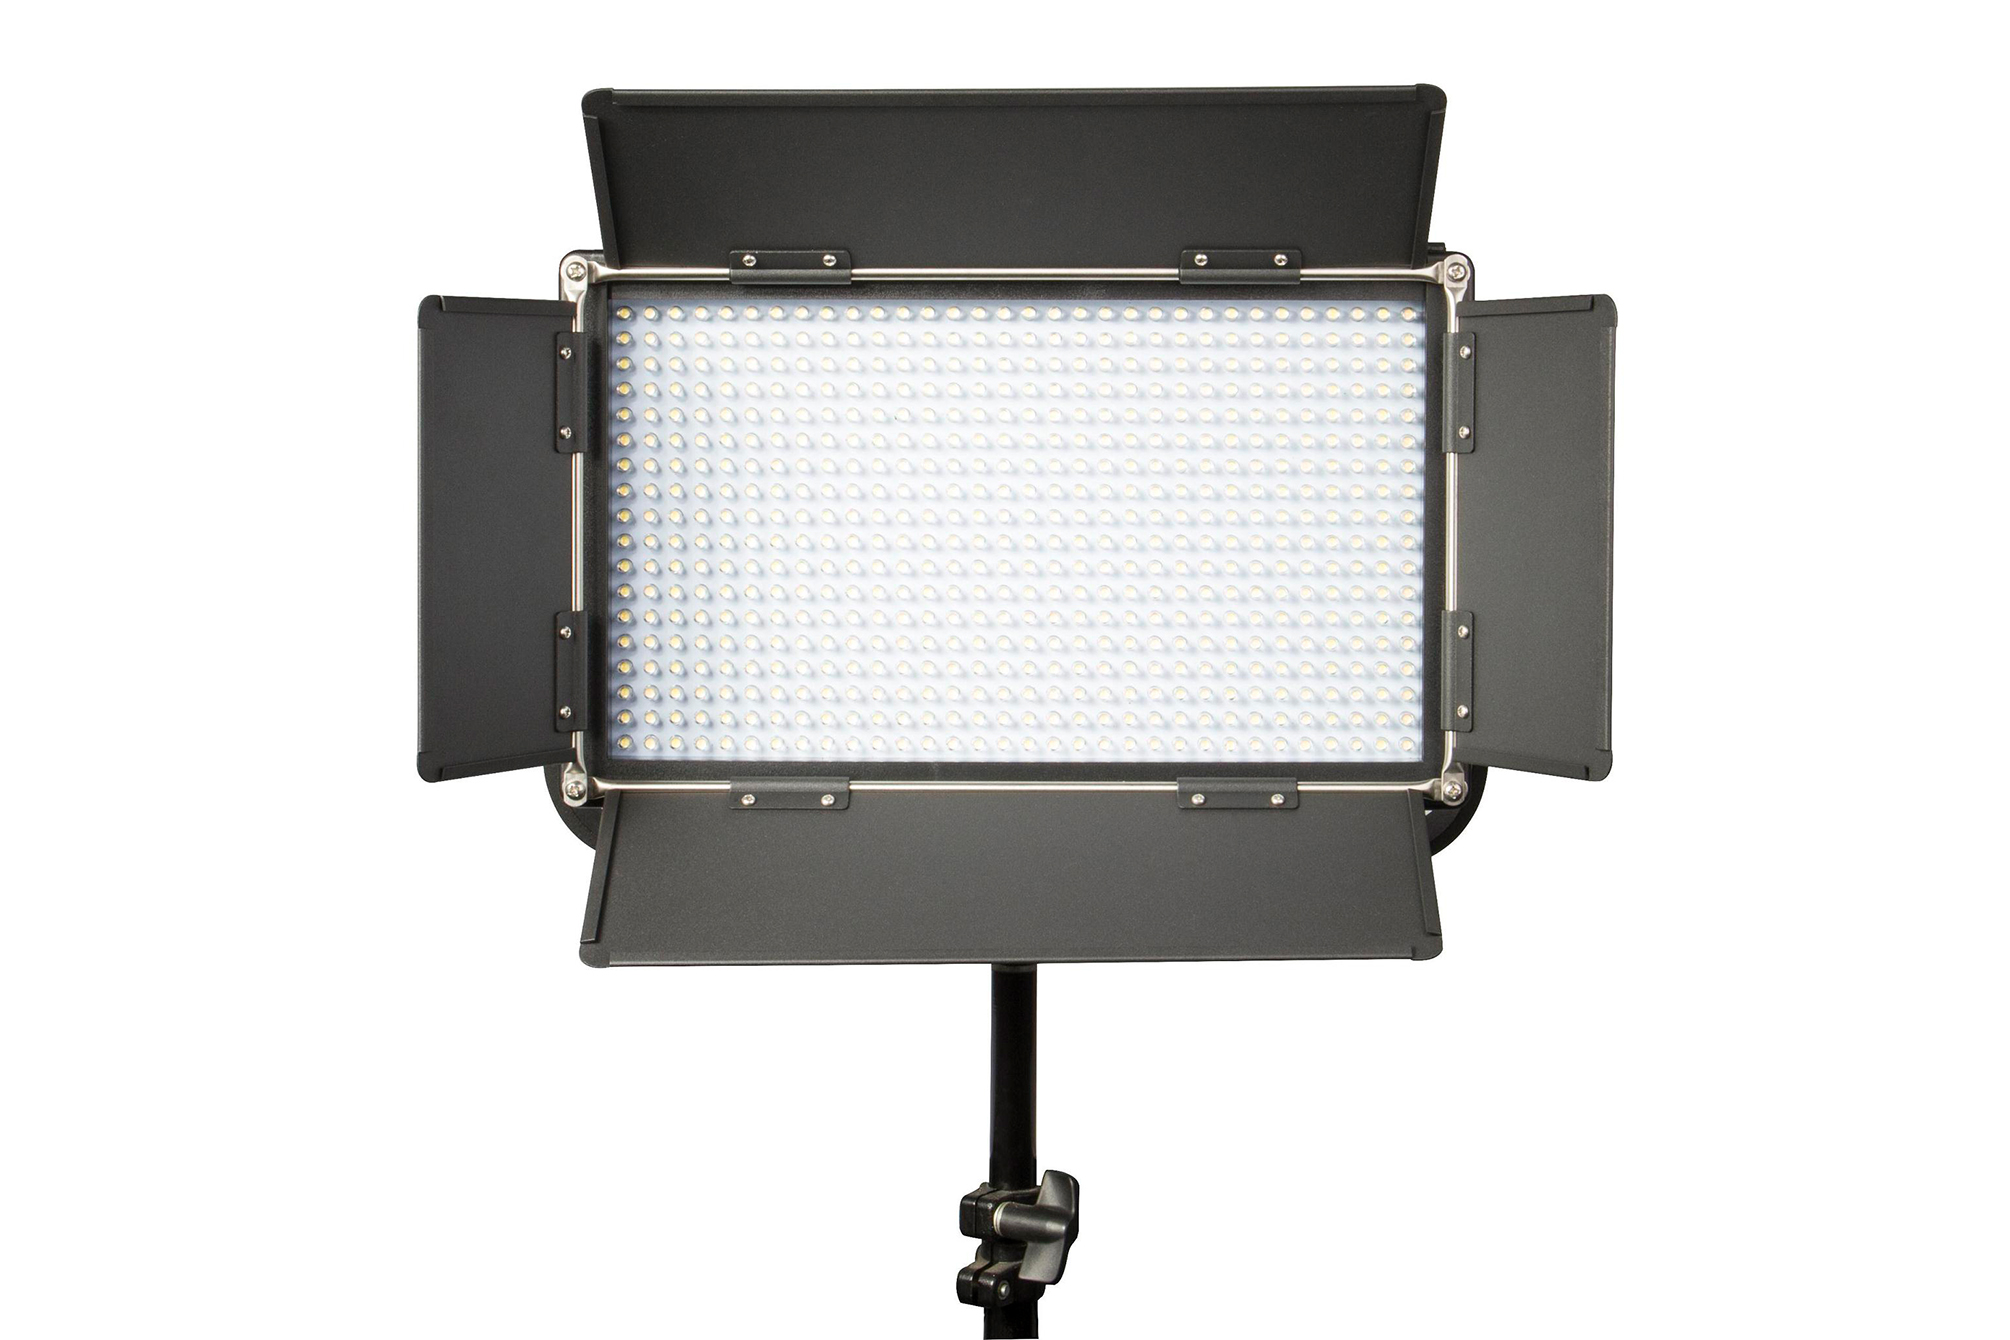 Swit S-2110DA, 576-LED Daylight Panel LED Light